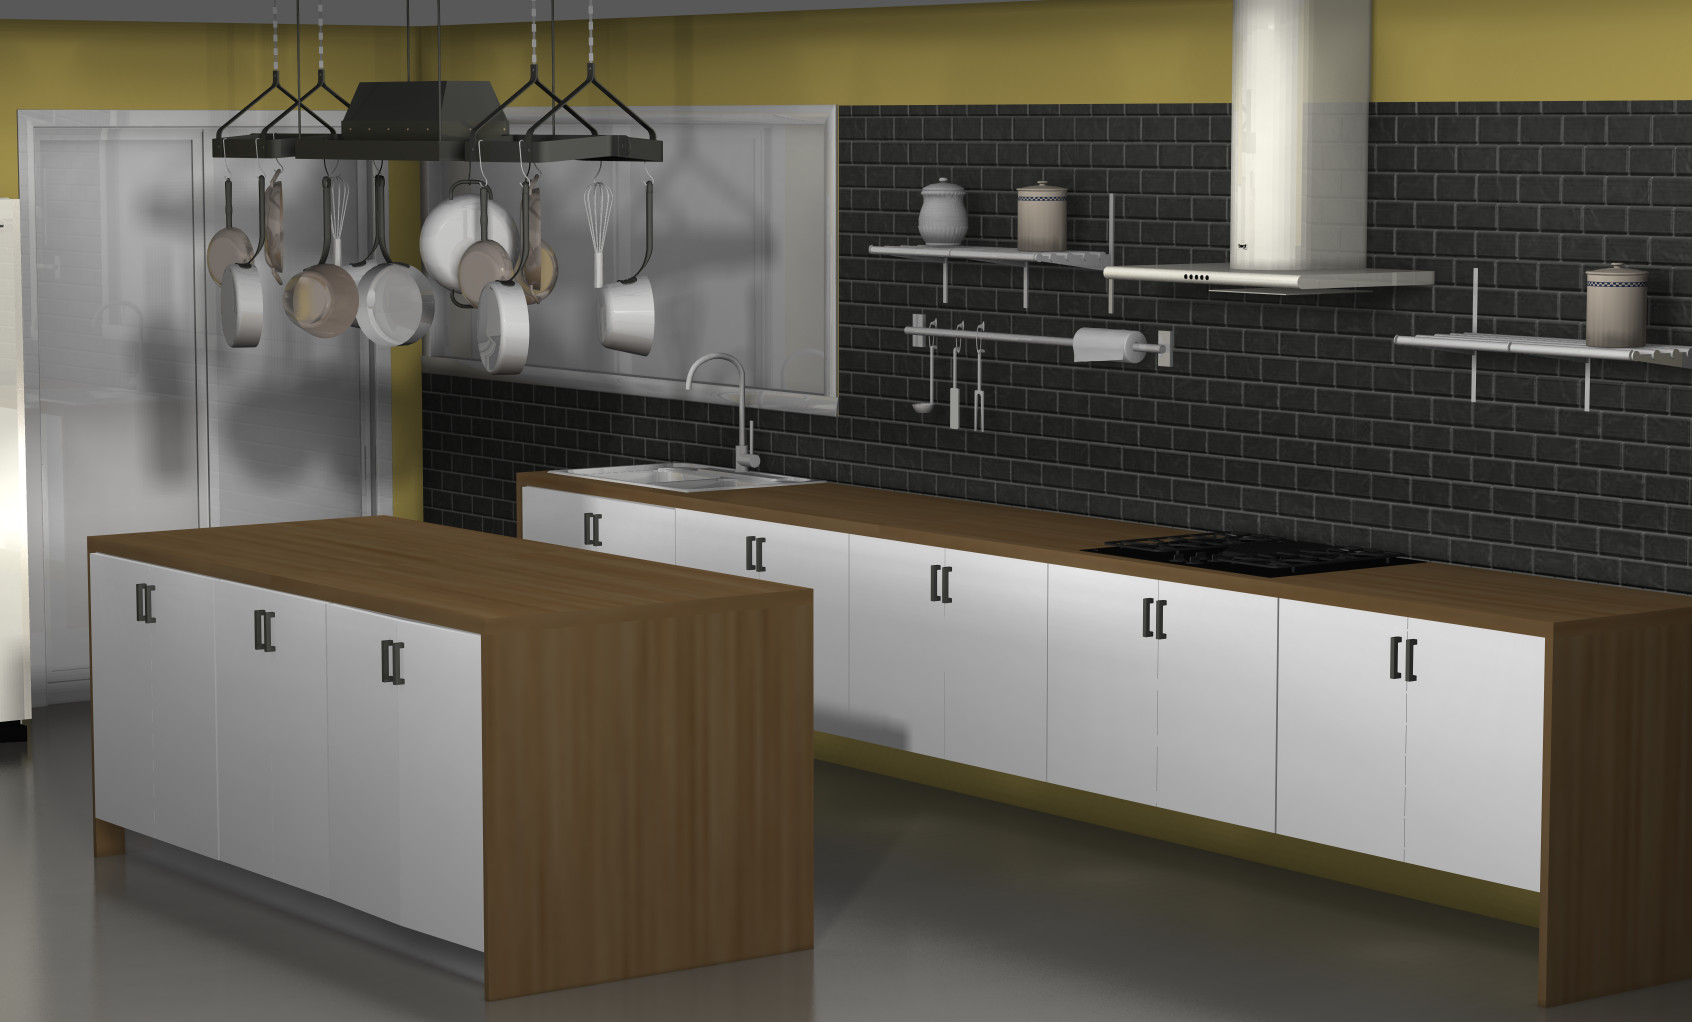 Kitchen Wall Storage
 Kitchen design ideas an IKEA kitchen with fewer wall cabinets